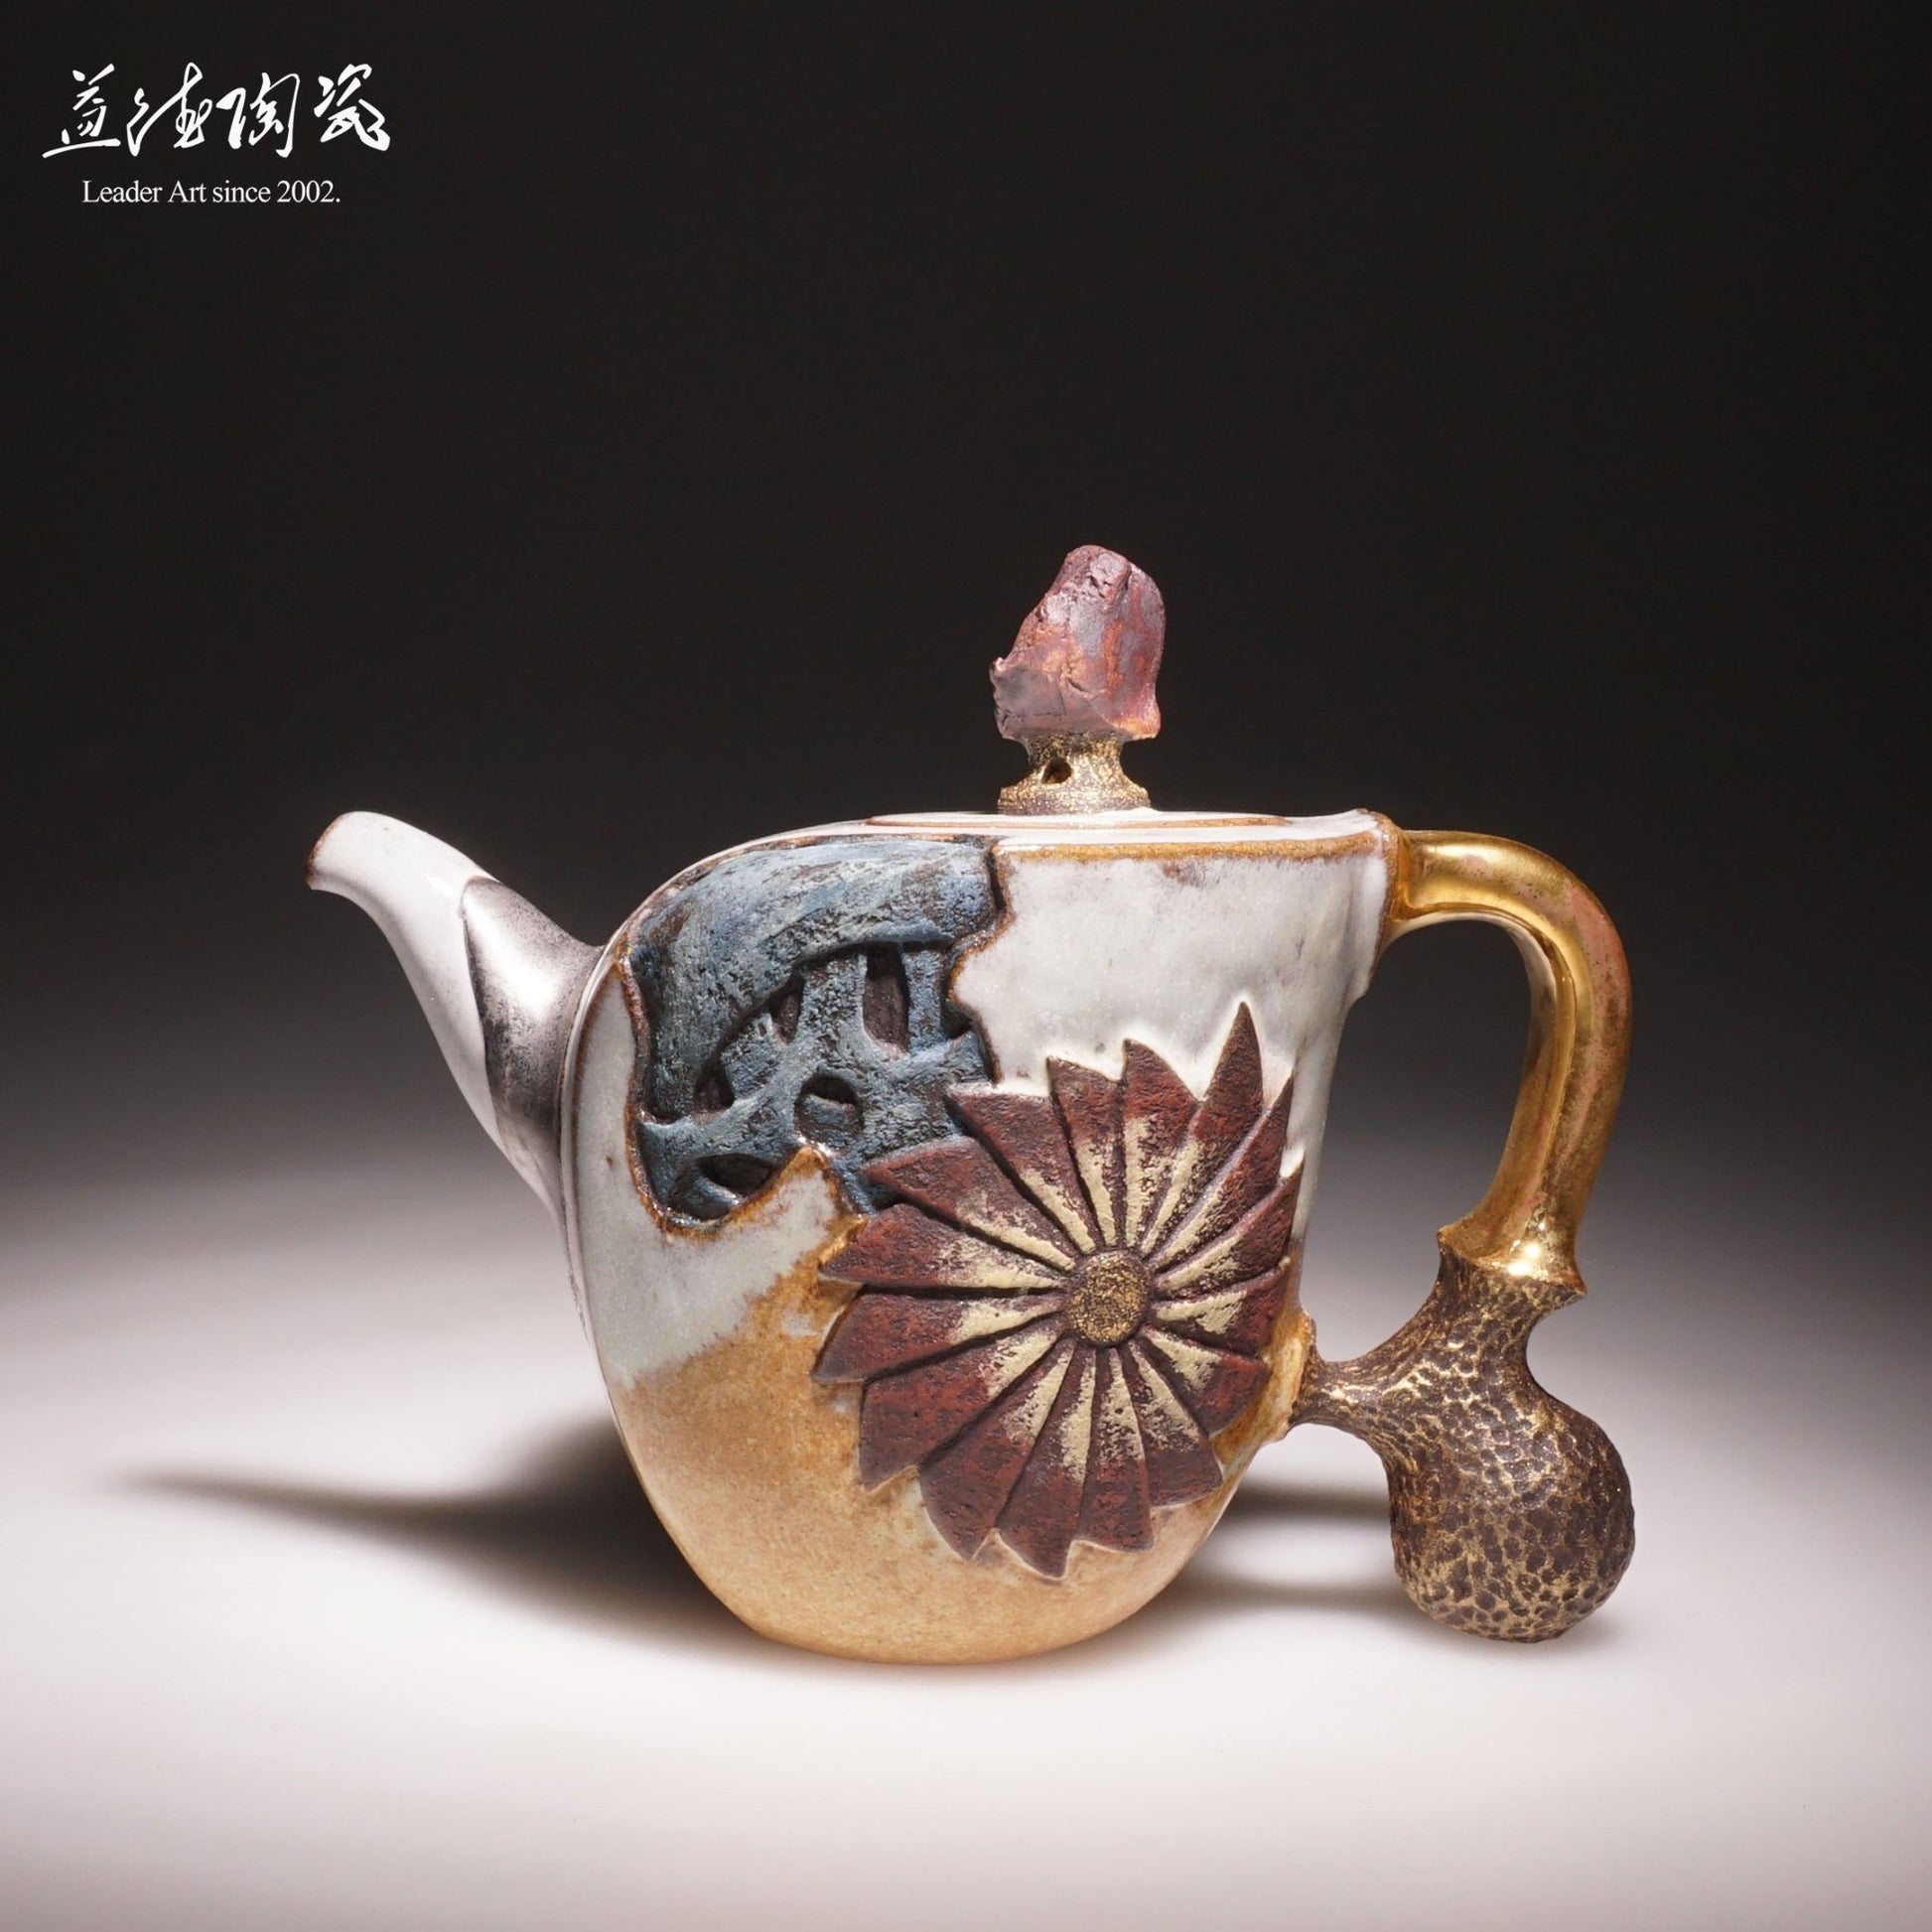 Black stone / exposed to the sun - Taiwan International Gold Teapot Prizes - LEADER 益德 | 居家設計藝品・人文茶器・空間美學作品